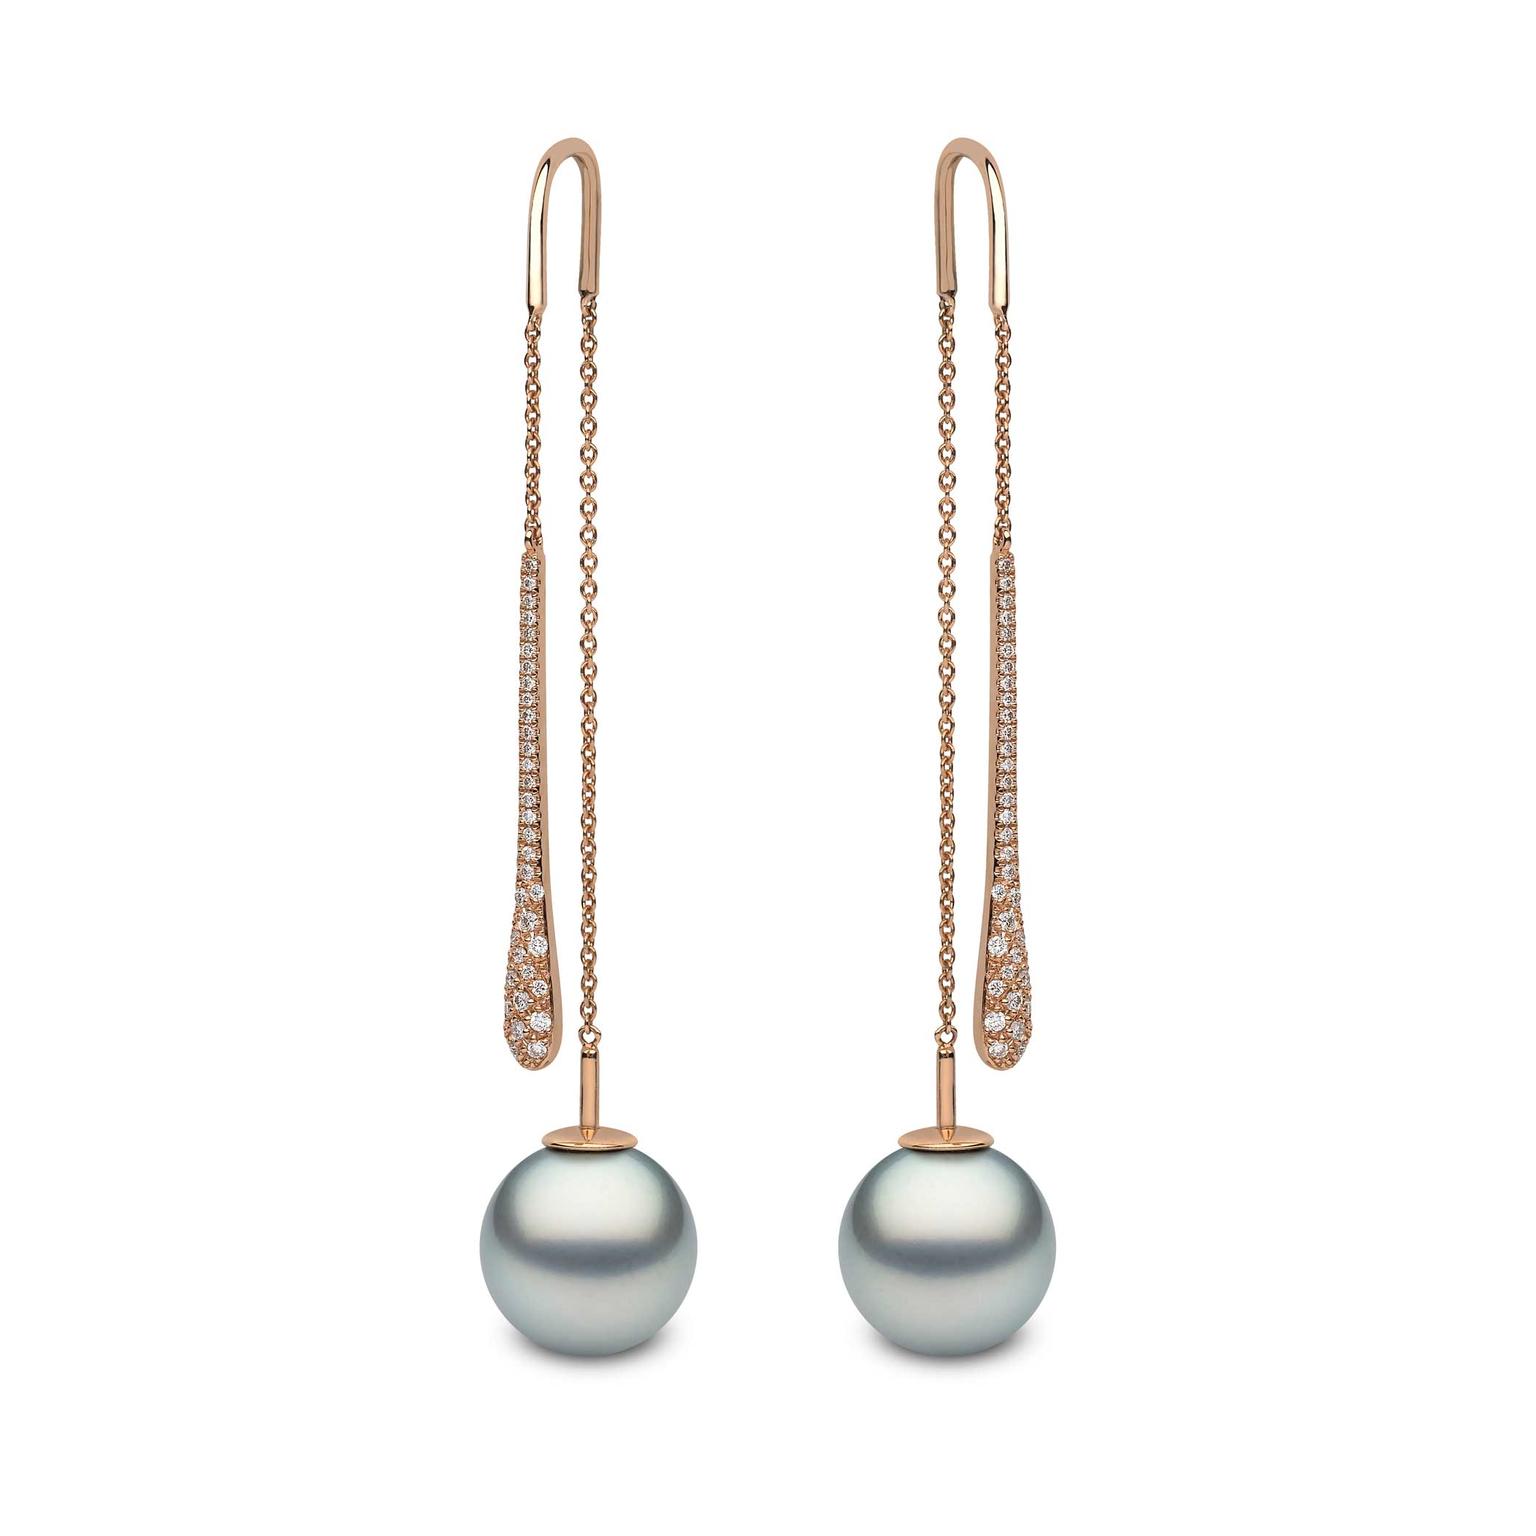 YOKO 18ct rose gold Pendulum earrings with tahitian pearls and diamonds